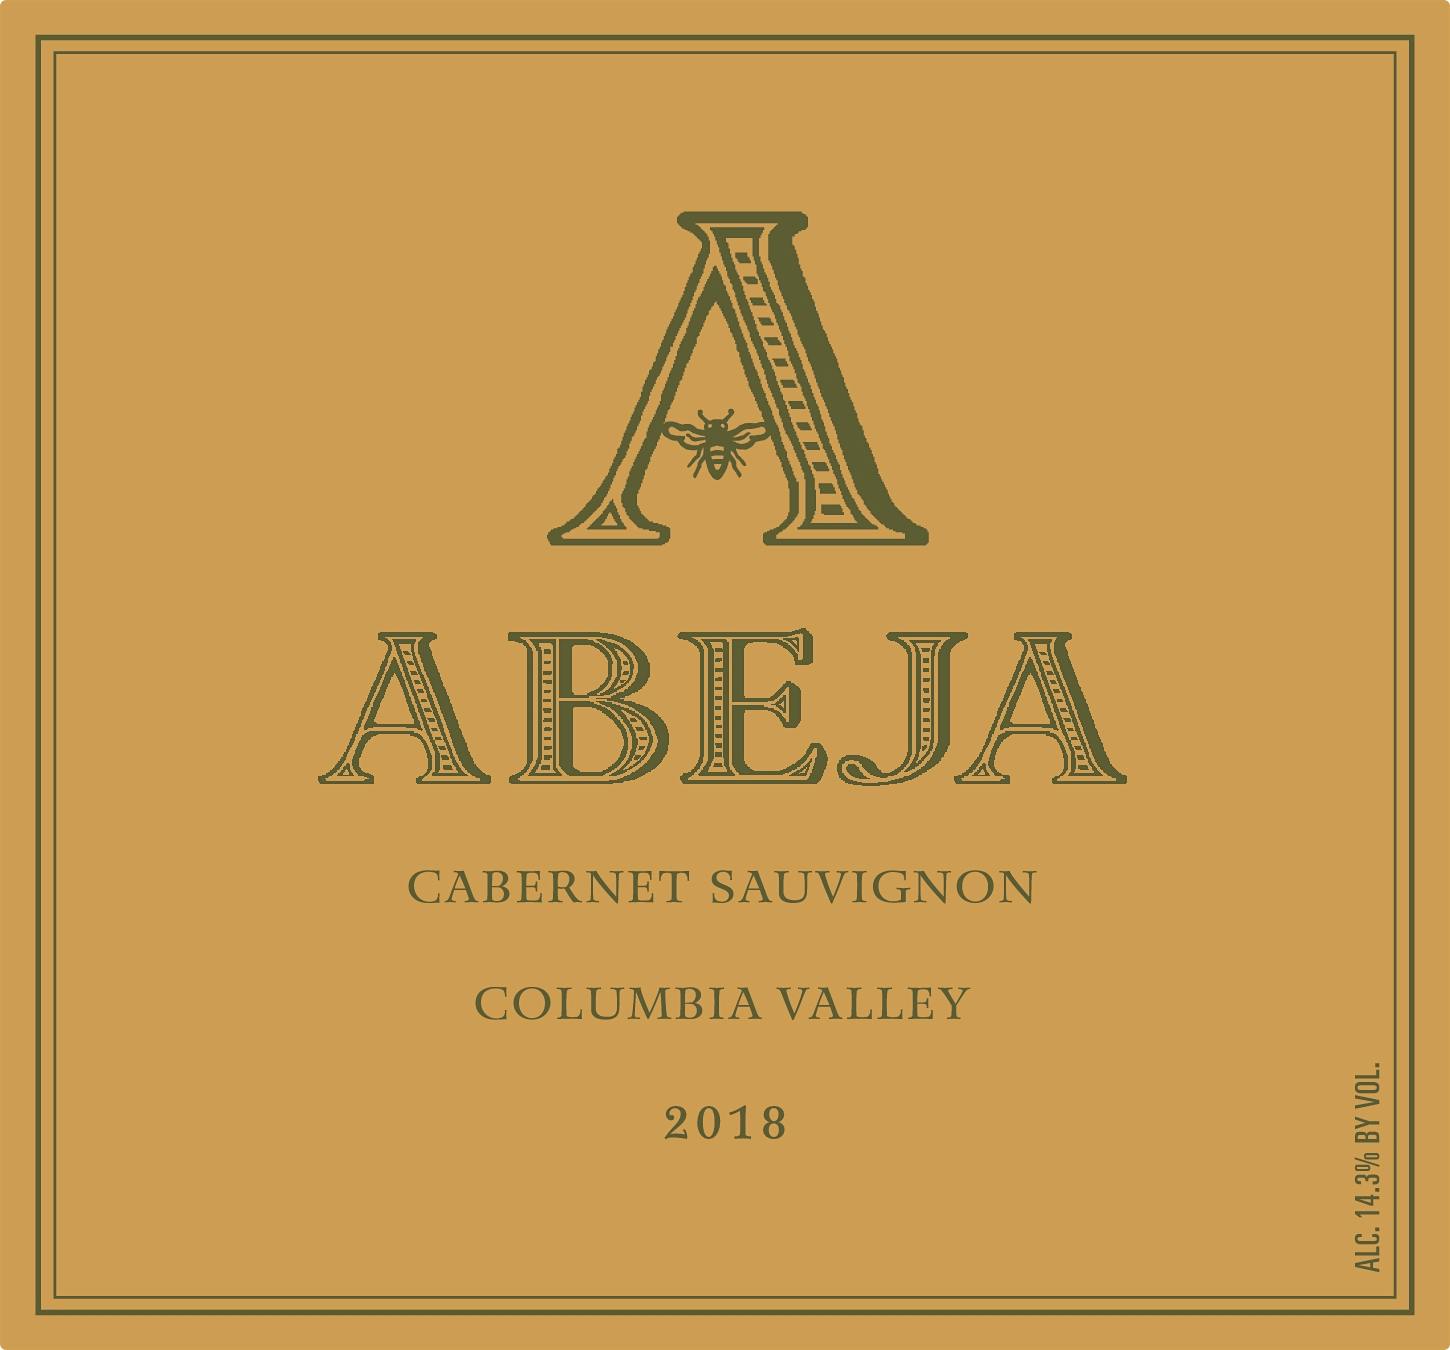 Label for Abeja